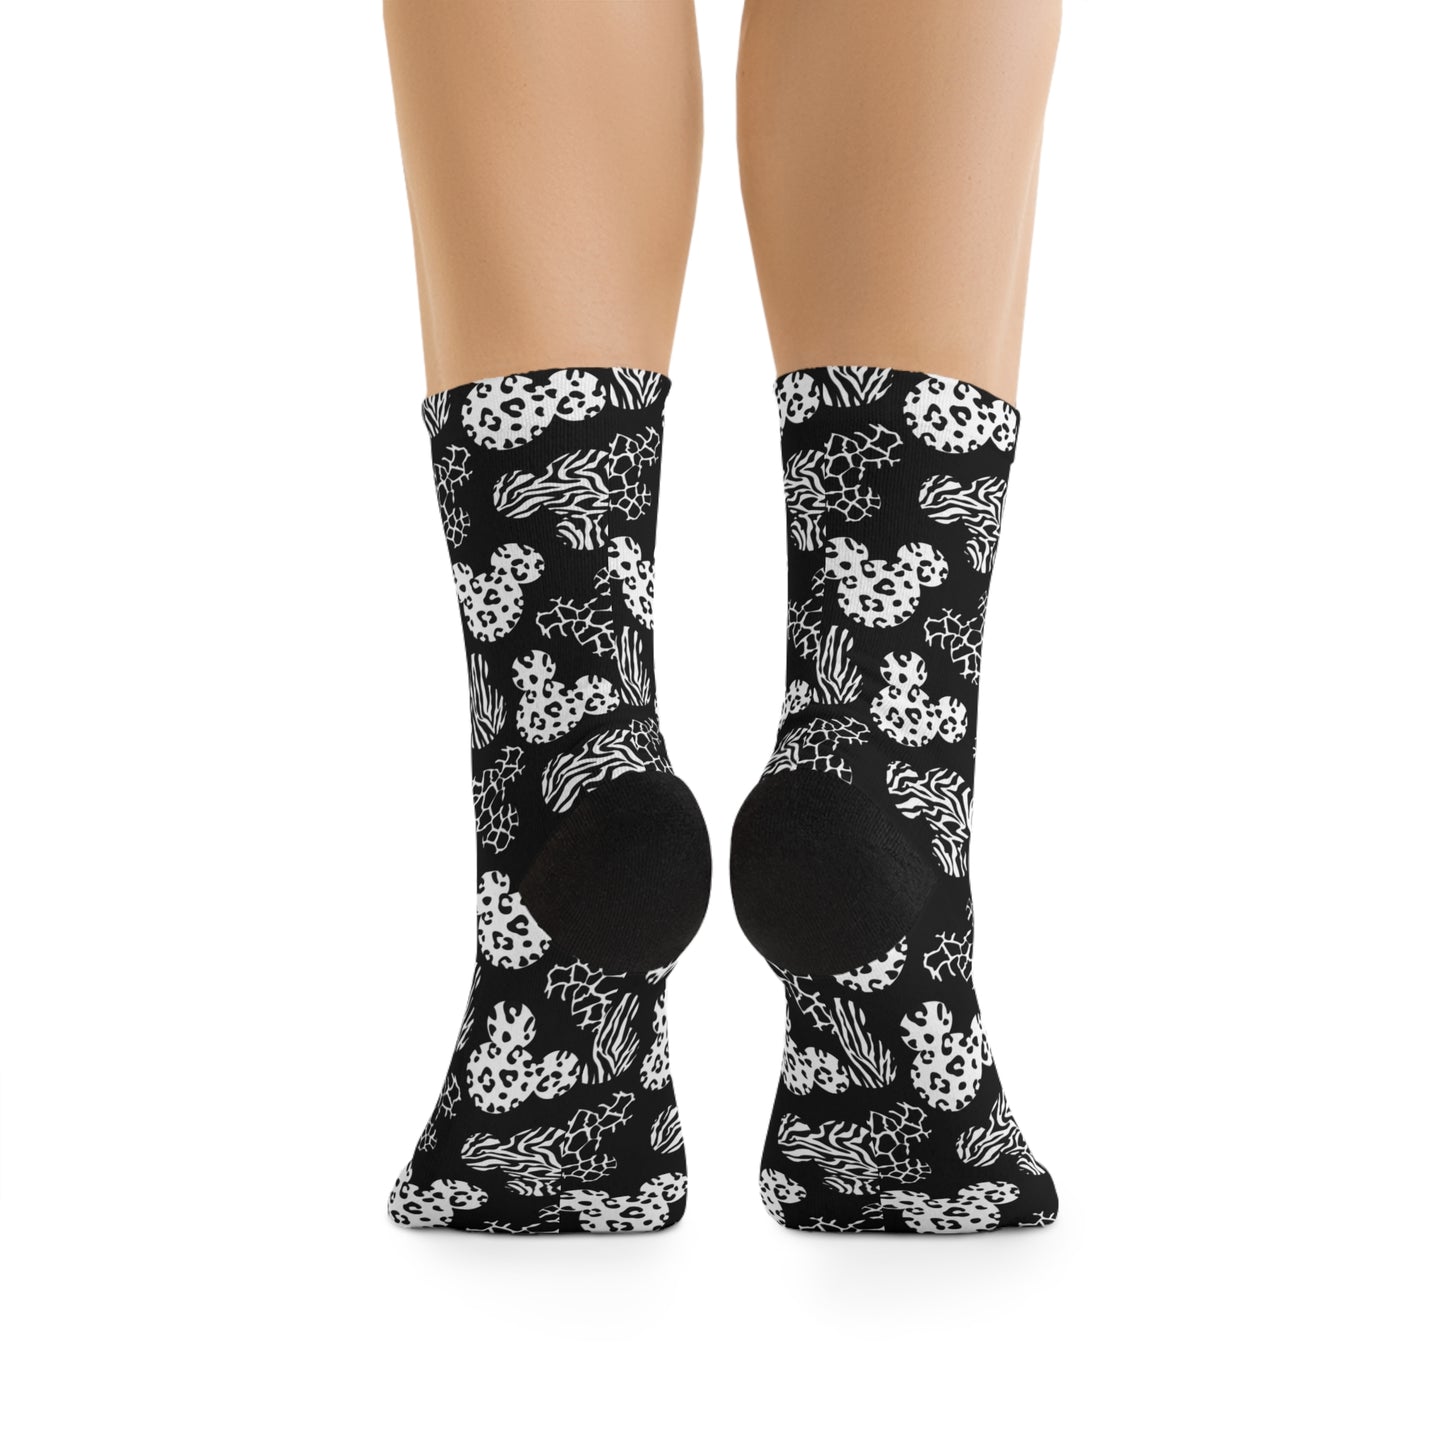 Black And White Animal Prints Socks